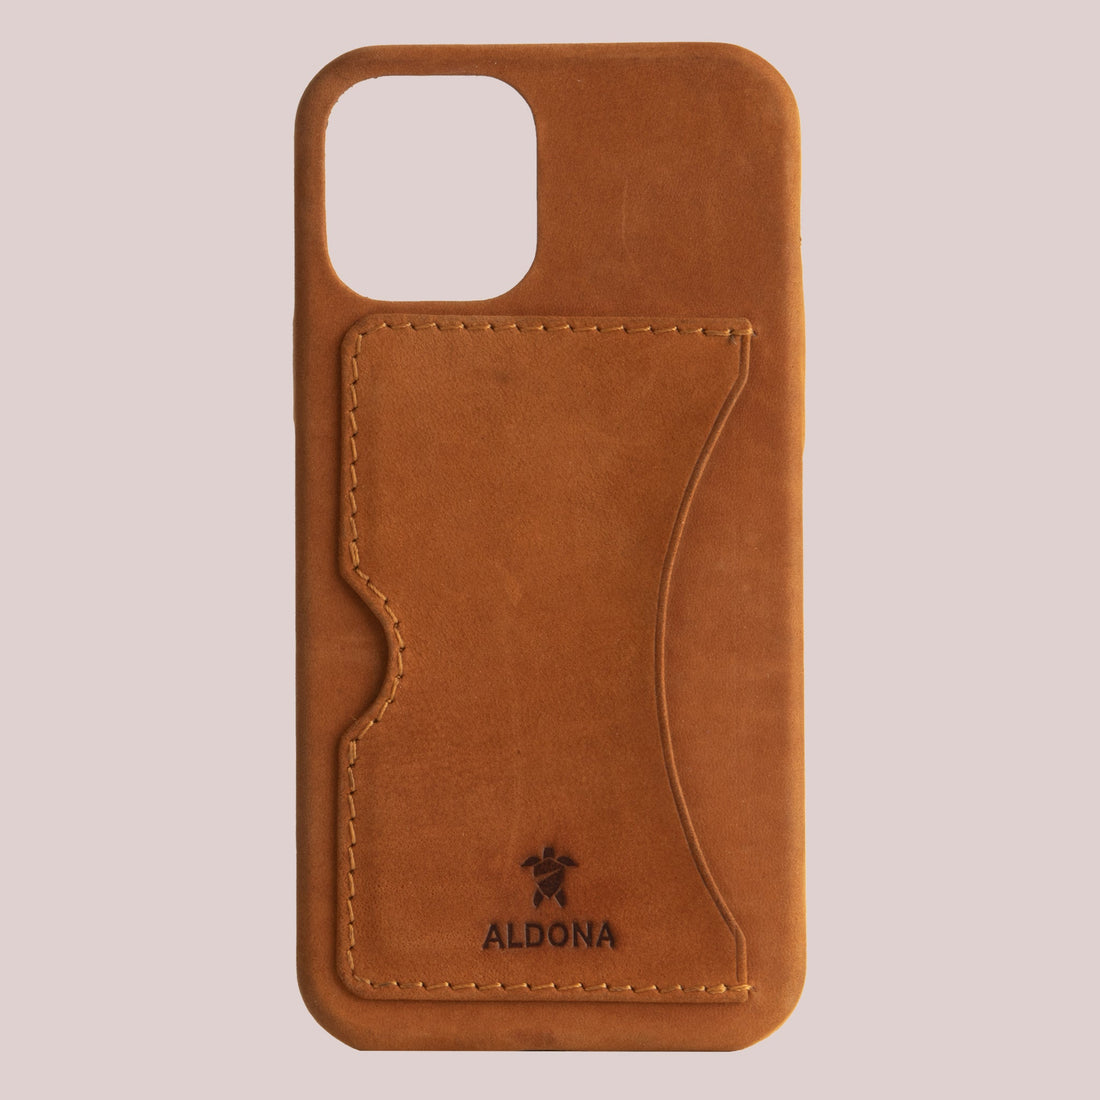 Baxter Card Case for iPhone 13 Mini - Cognac